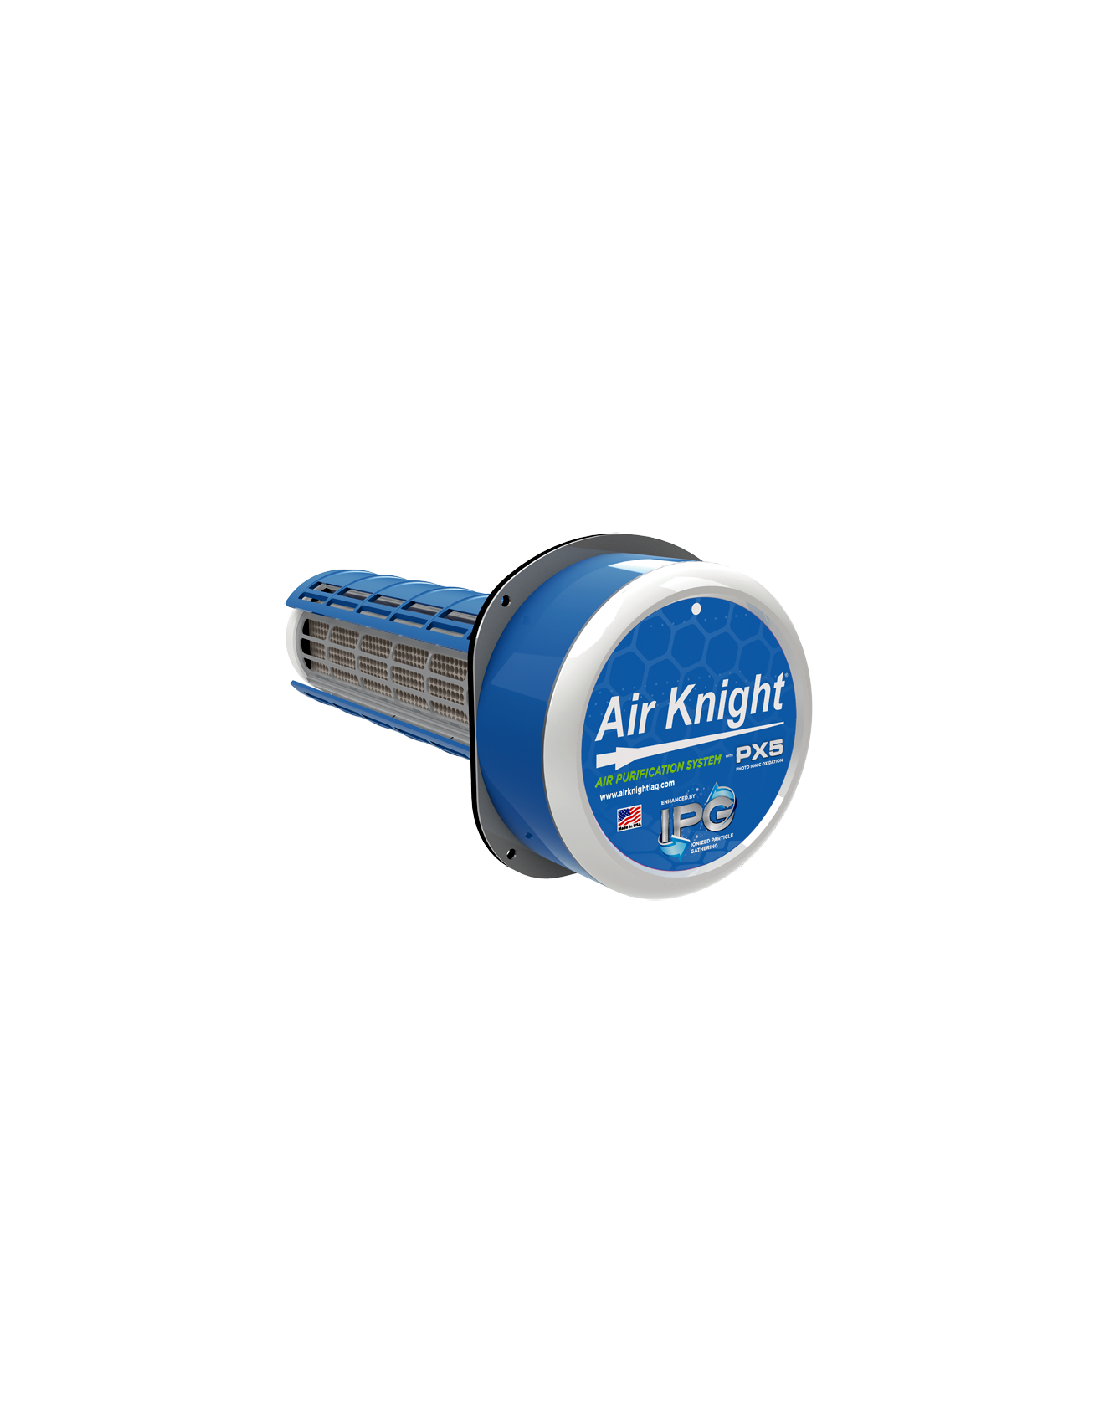 Air Knight depuratore sanificatore Aria per ambienti ...